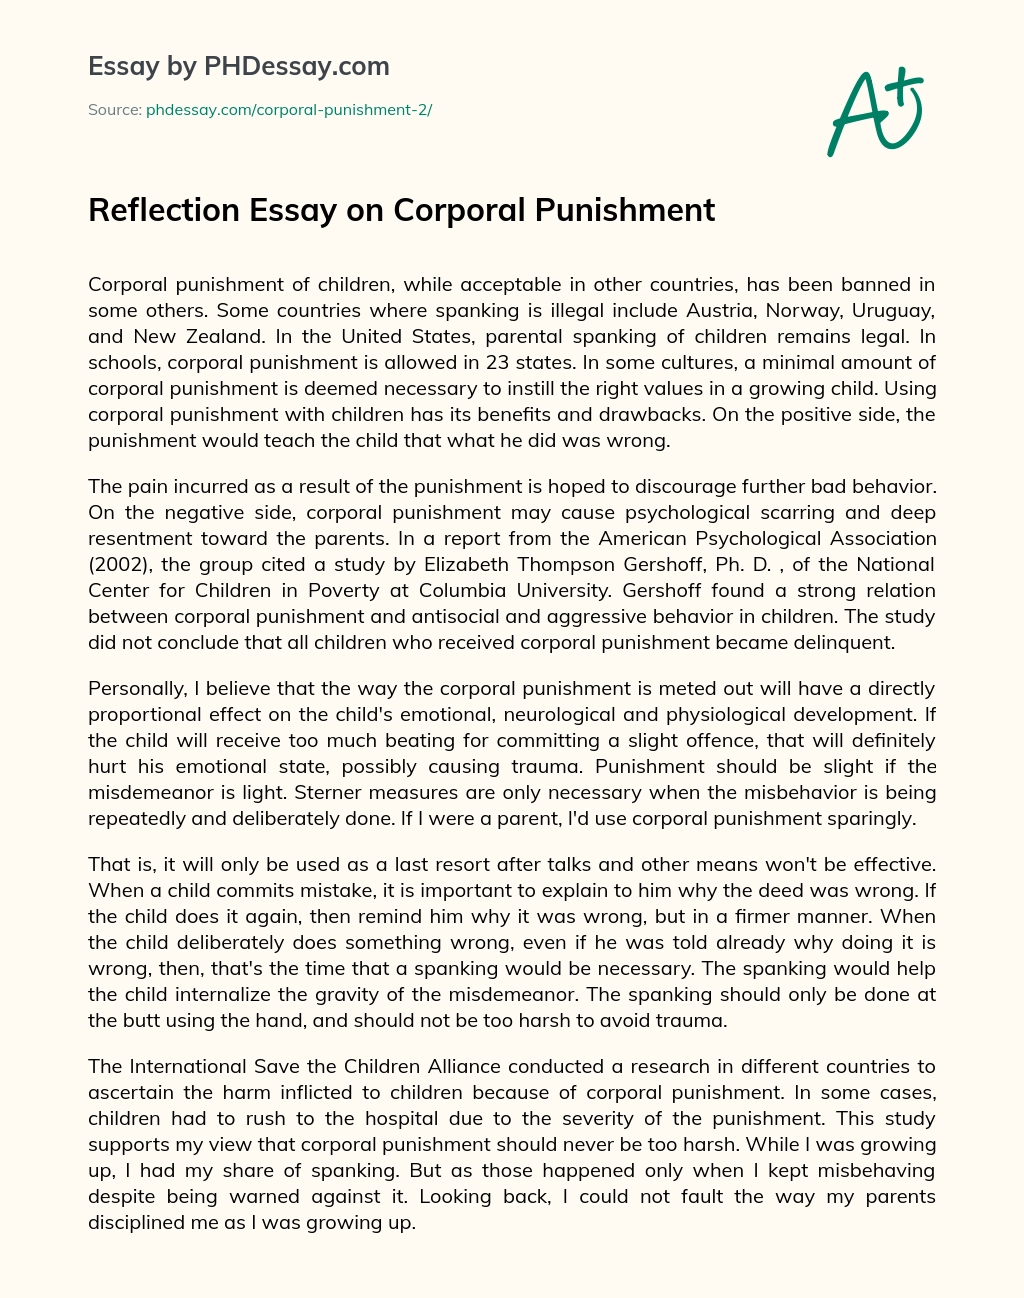 Reflection Essay on Corporal Punishment essay